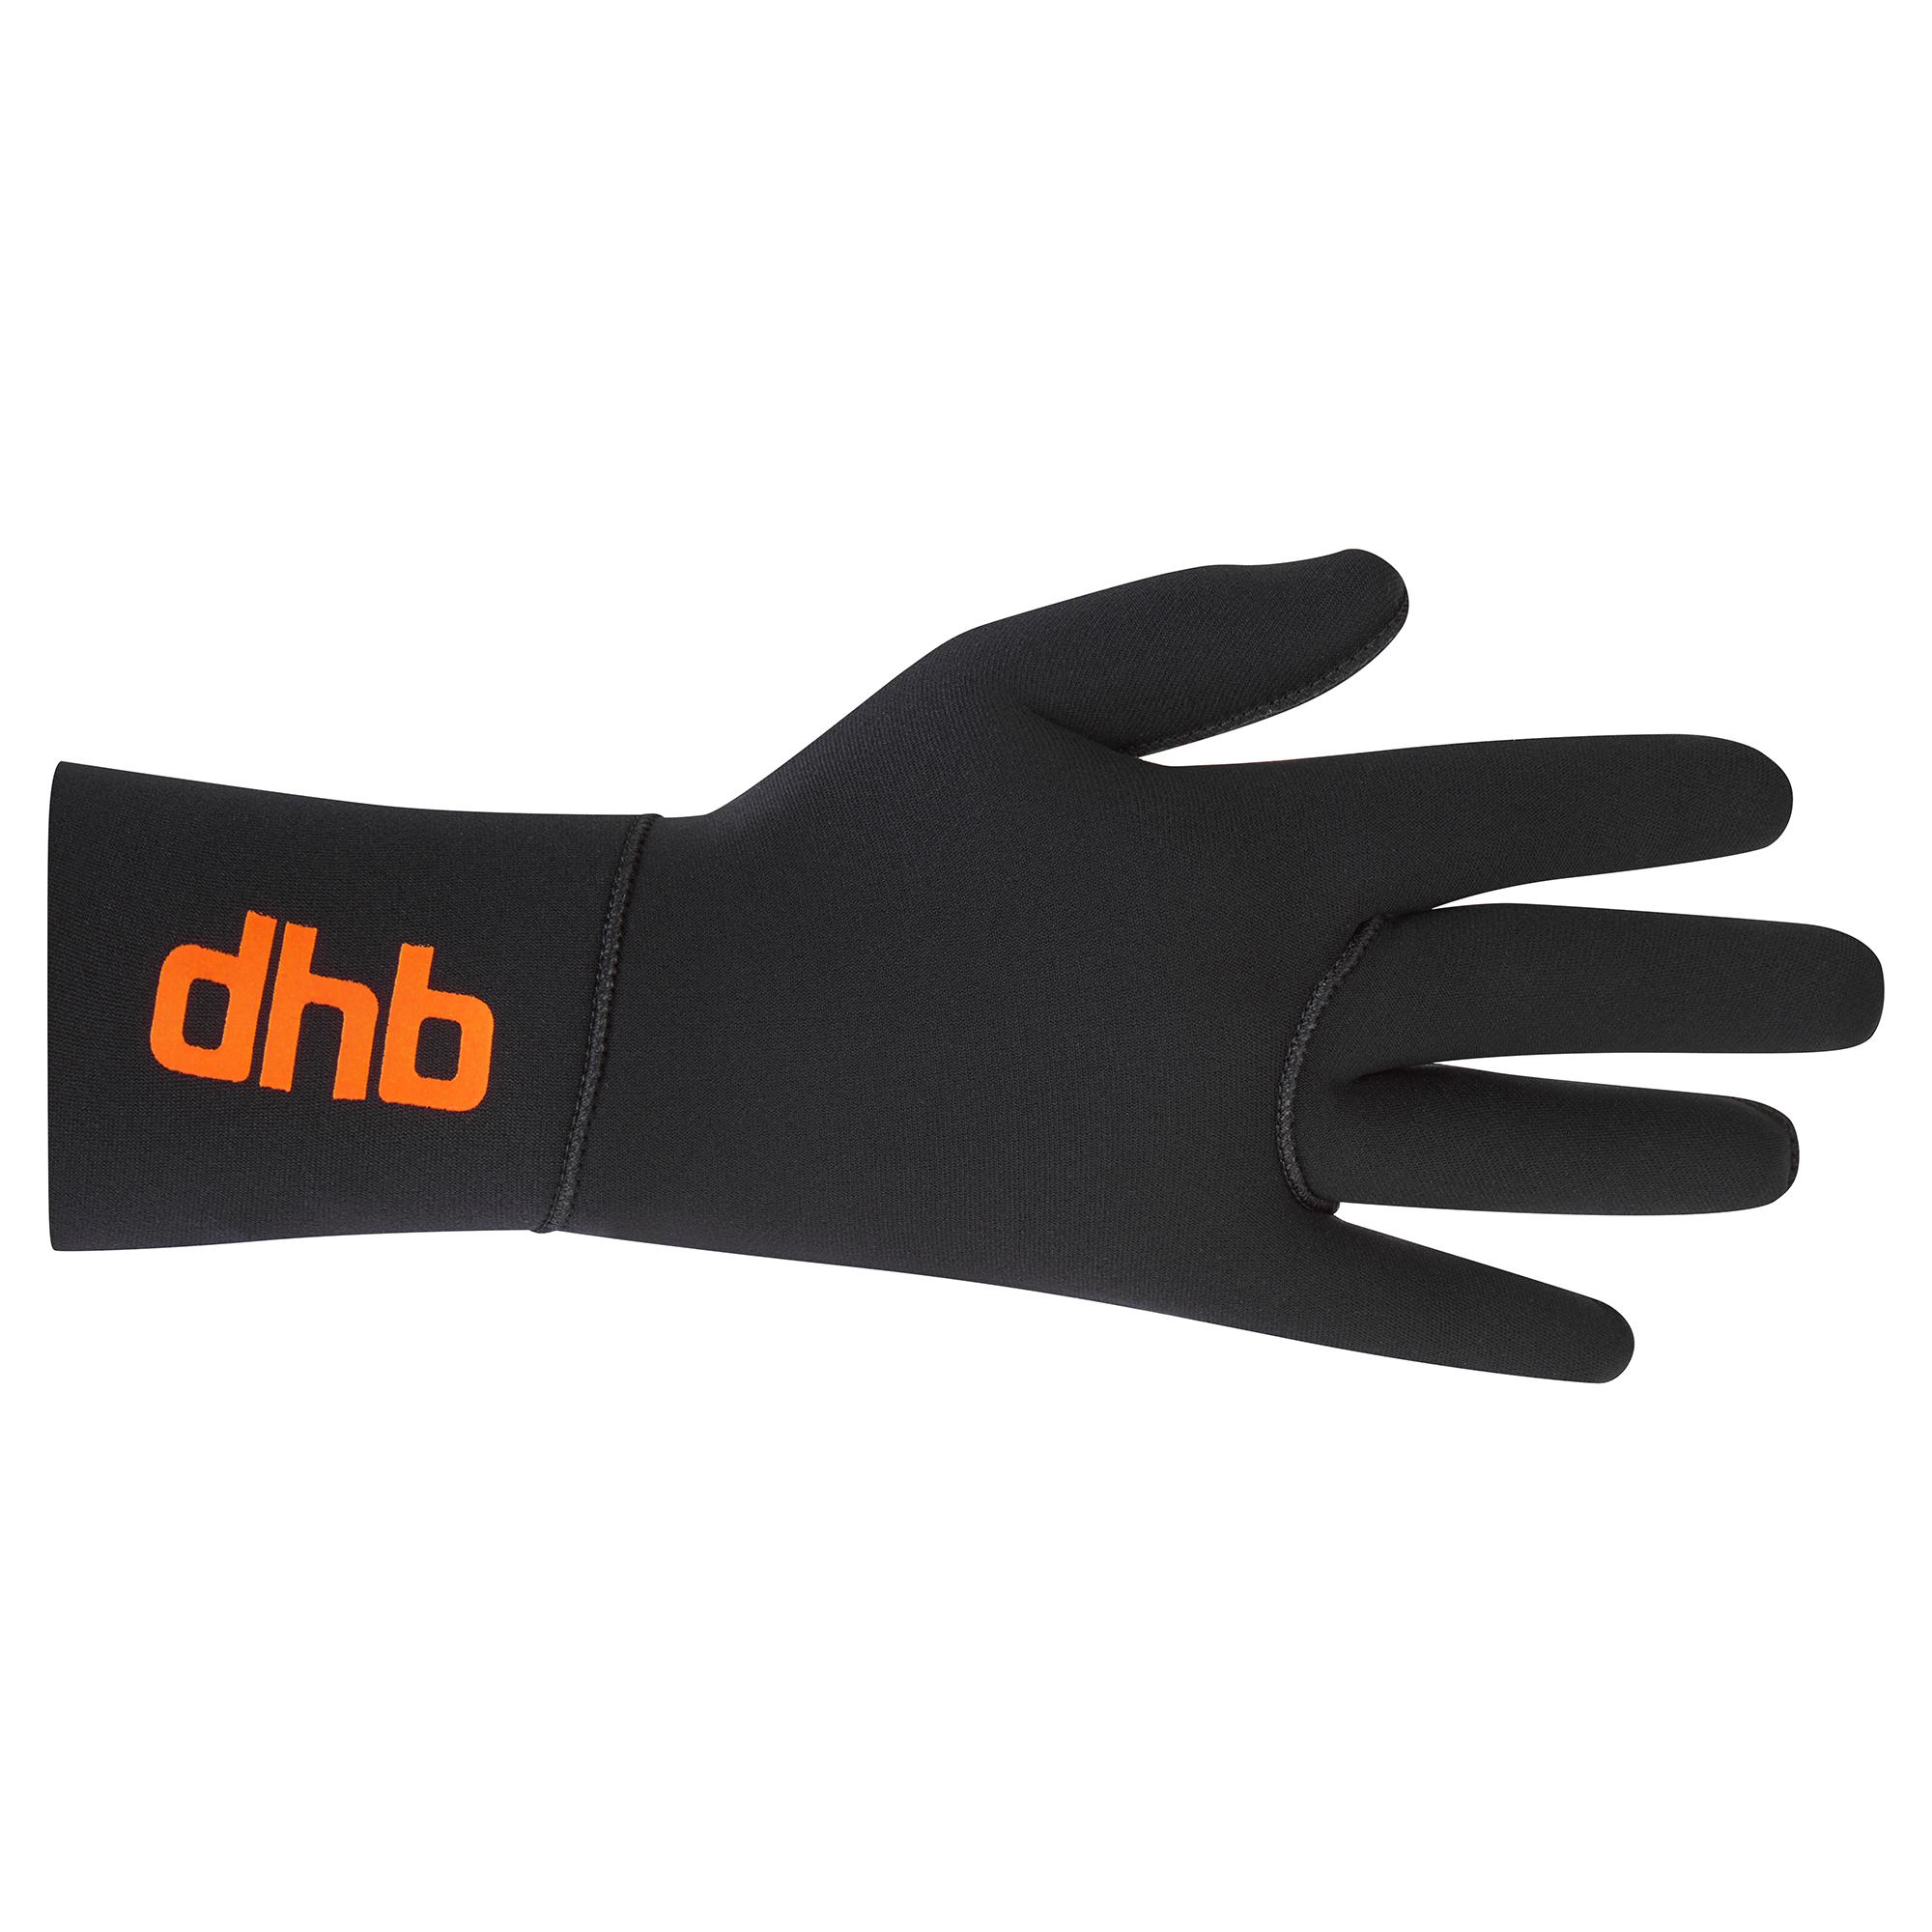 Dhb Hydron Thermal Swim Gloves 2.0 - Black